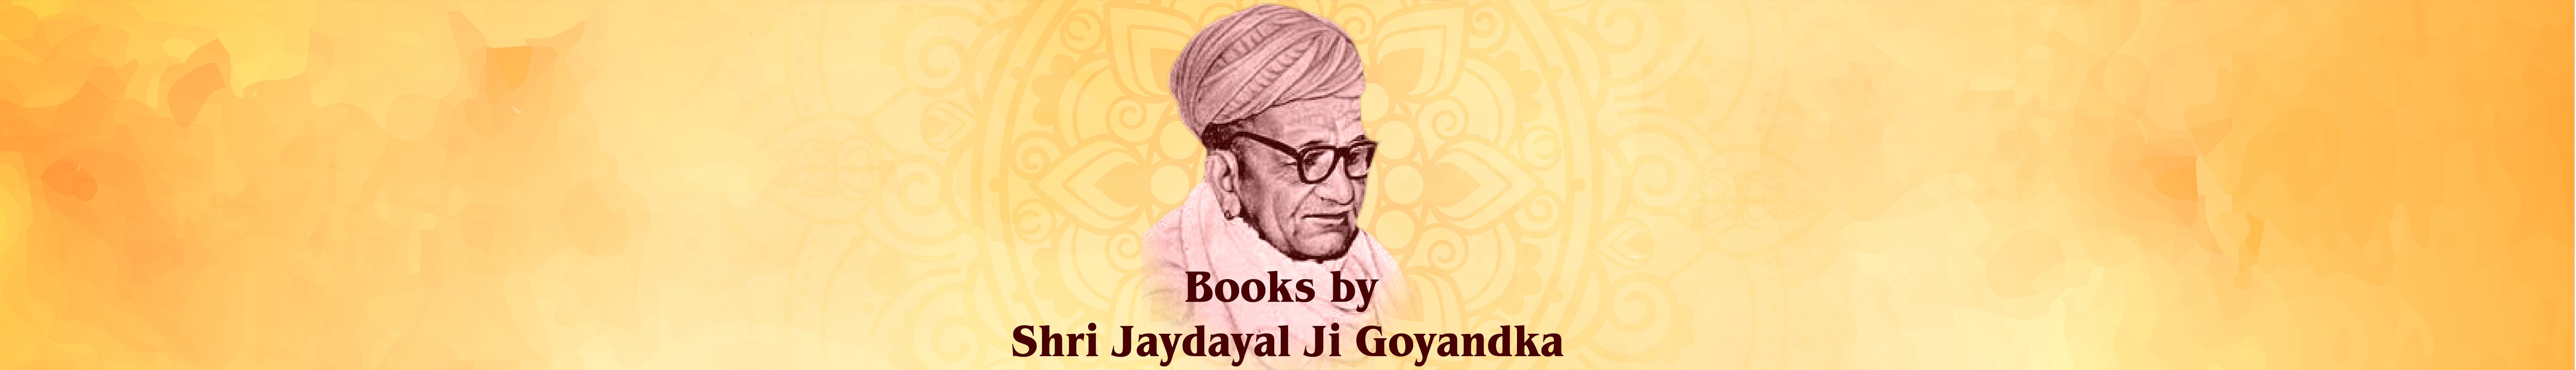 Books by Shri Jaydayal Ji Goyandka